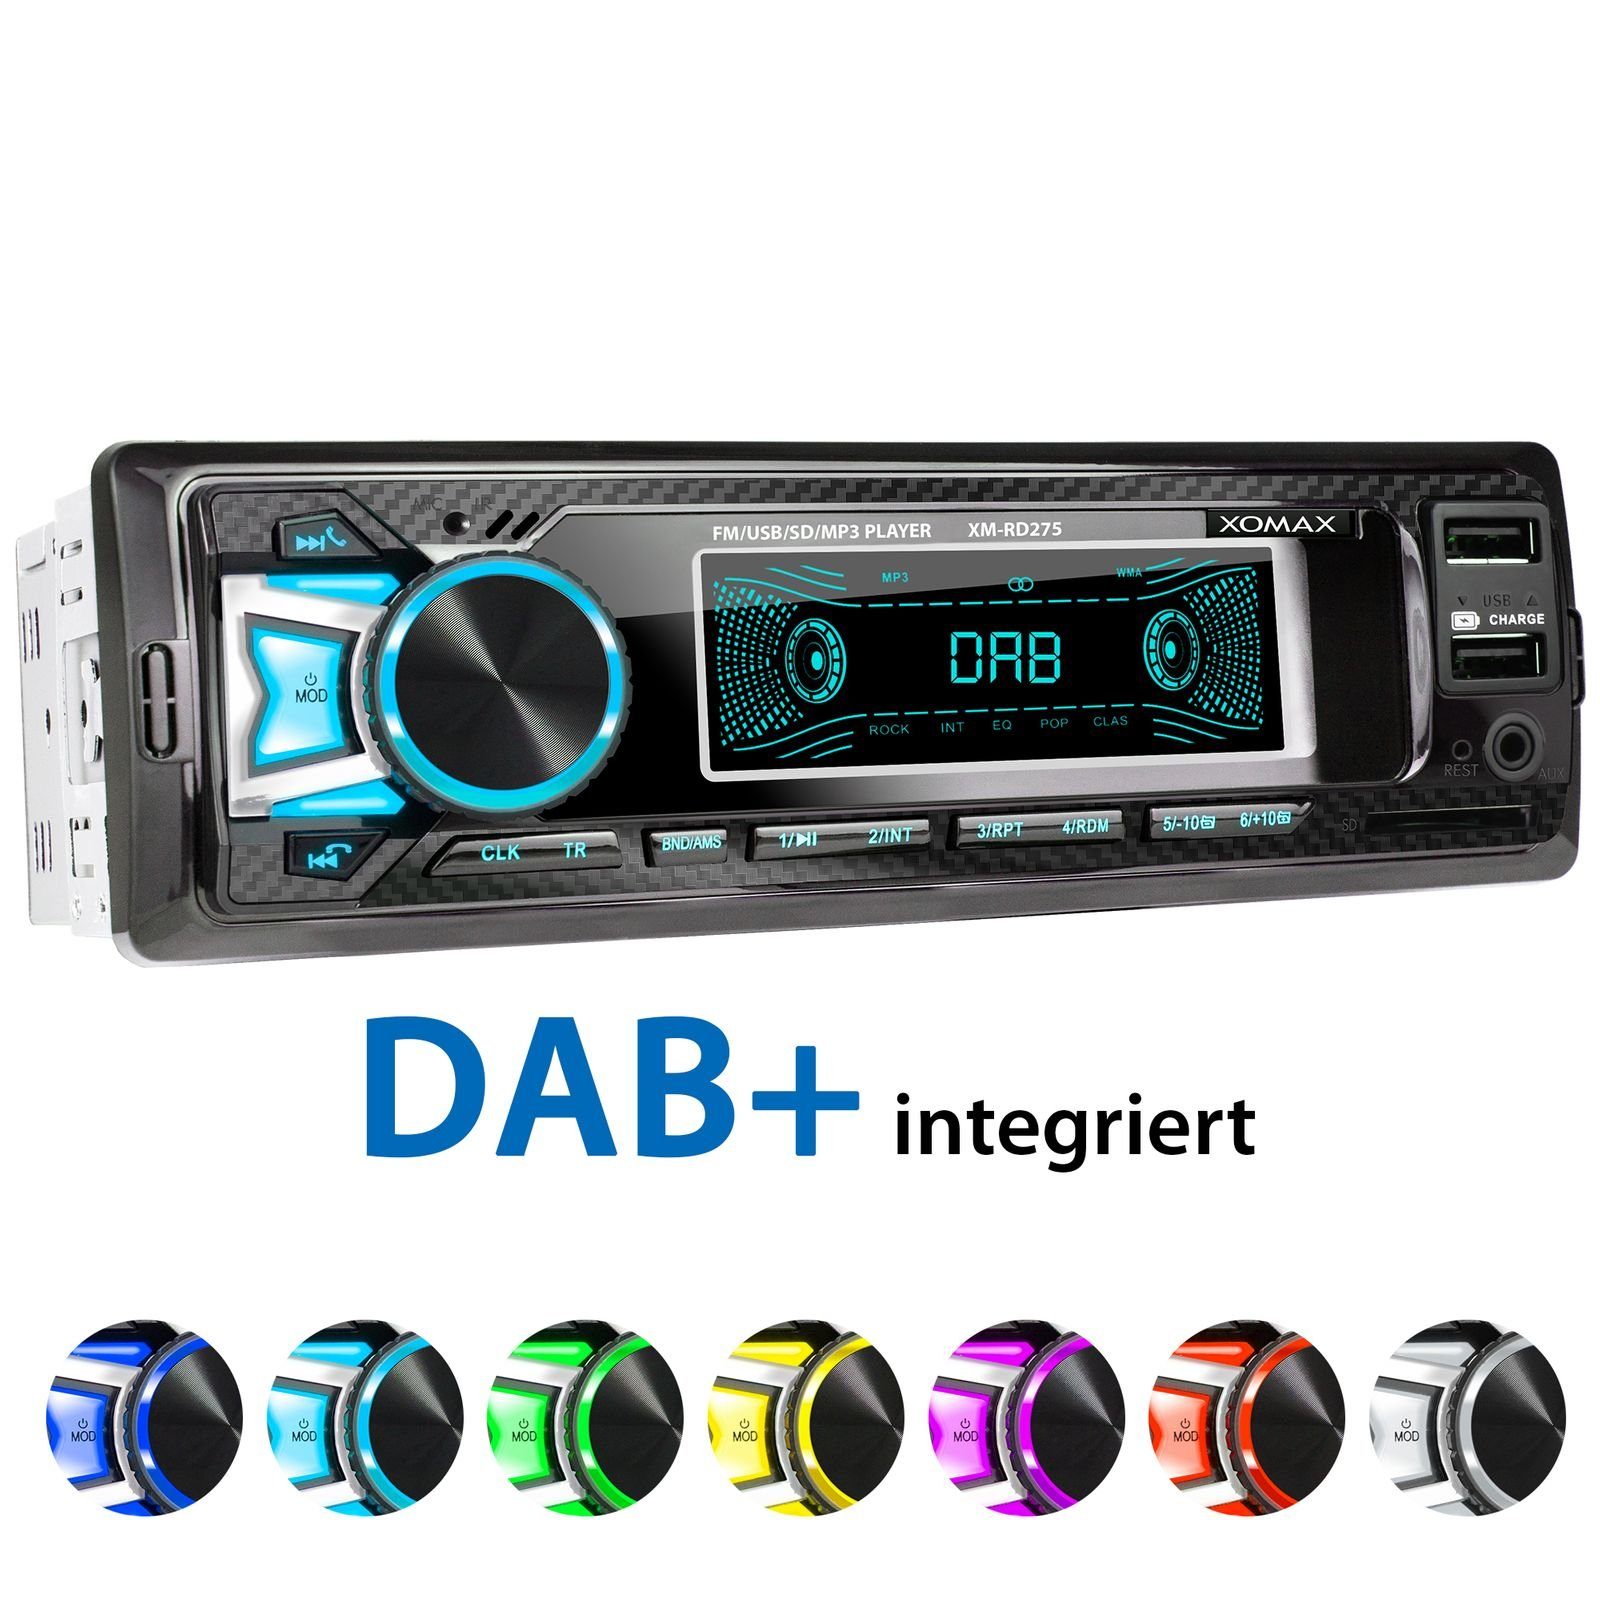 DAB+ Autoradio plus, 2x Bluetooth, XM-RD275 1 mit XOMAX DIN SD, USB, Autoradio Aux,